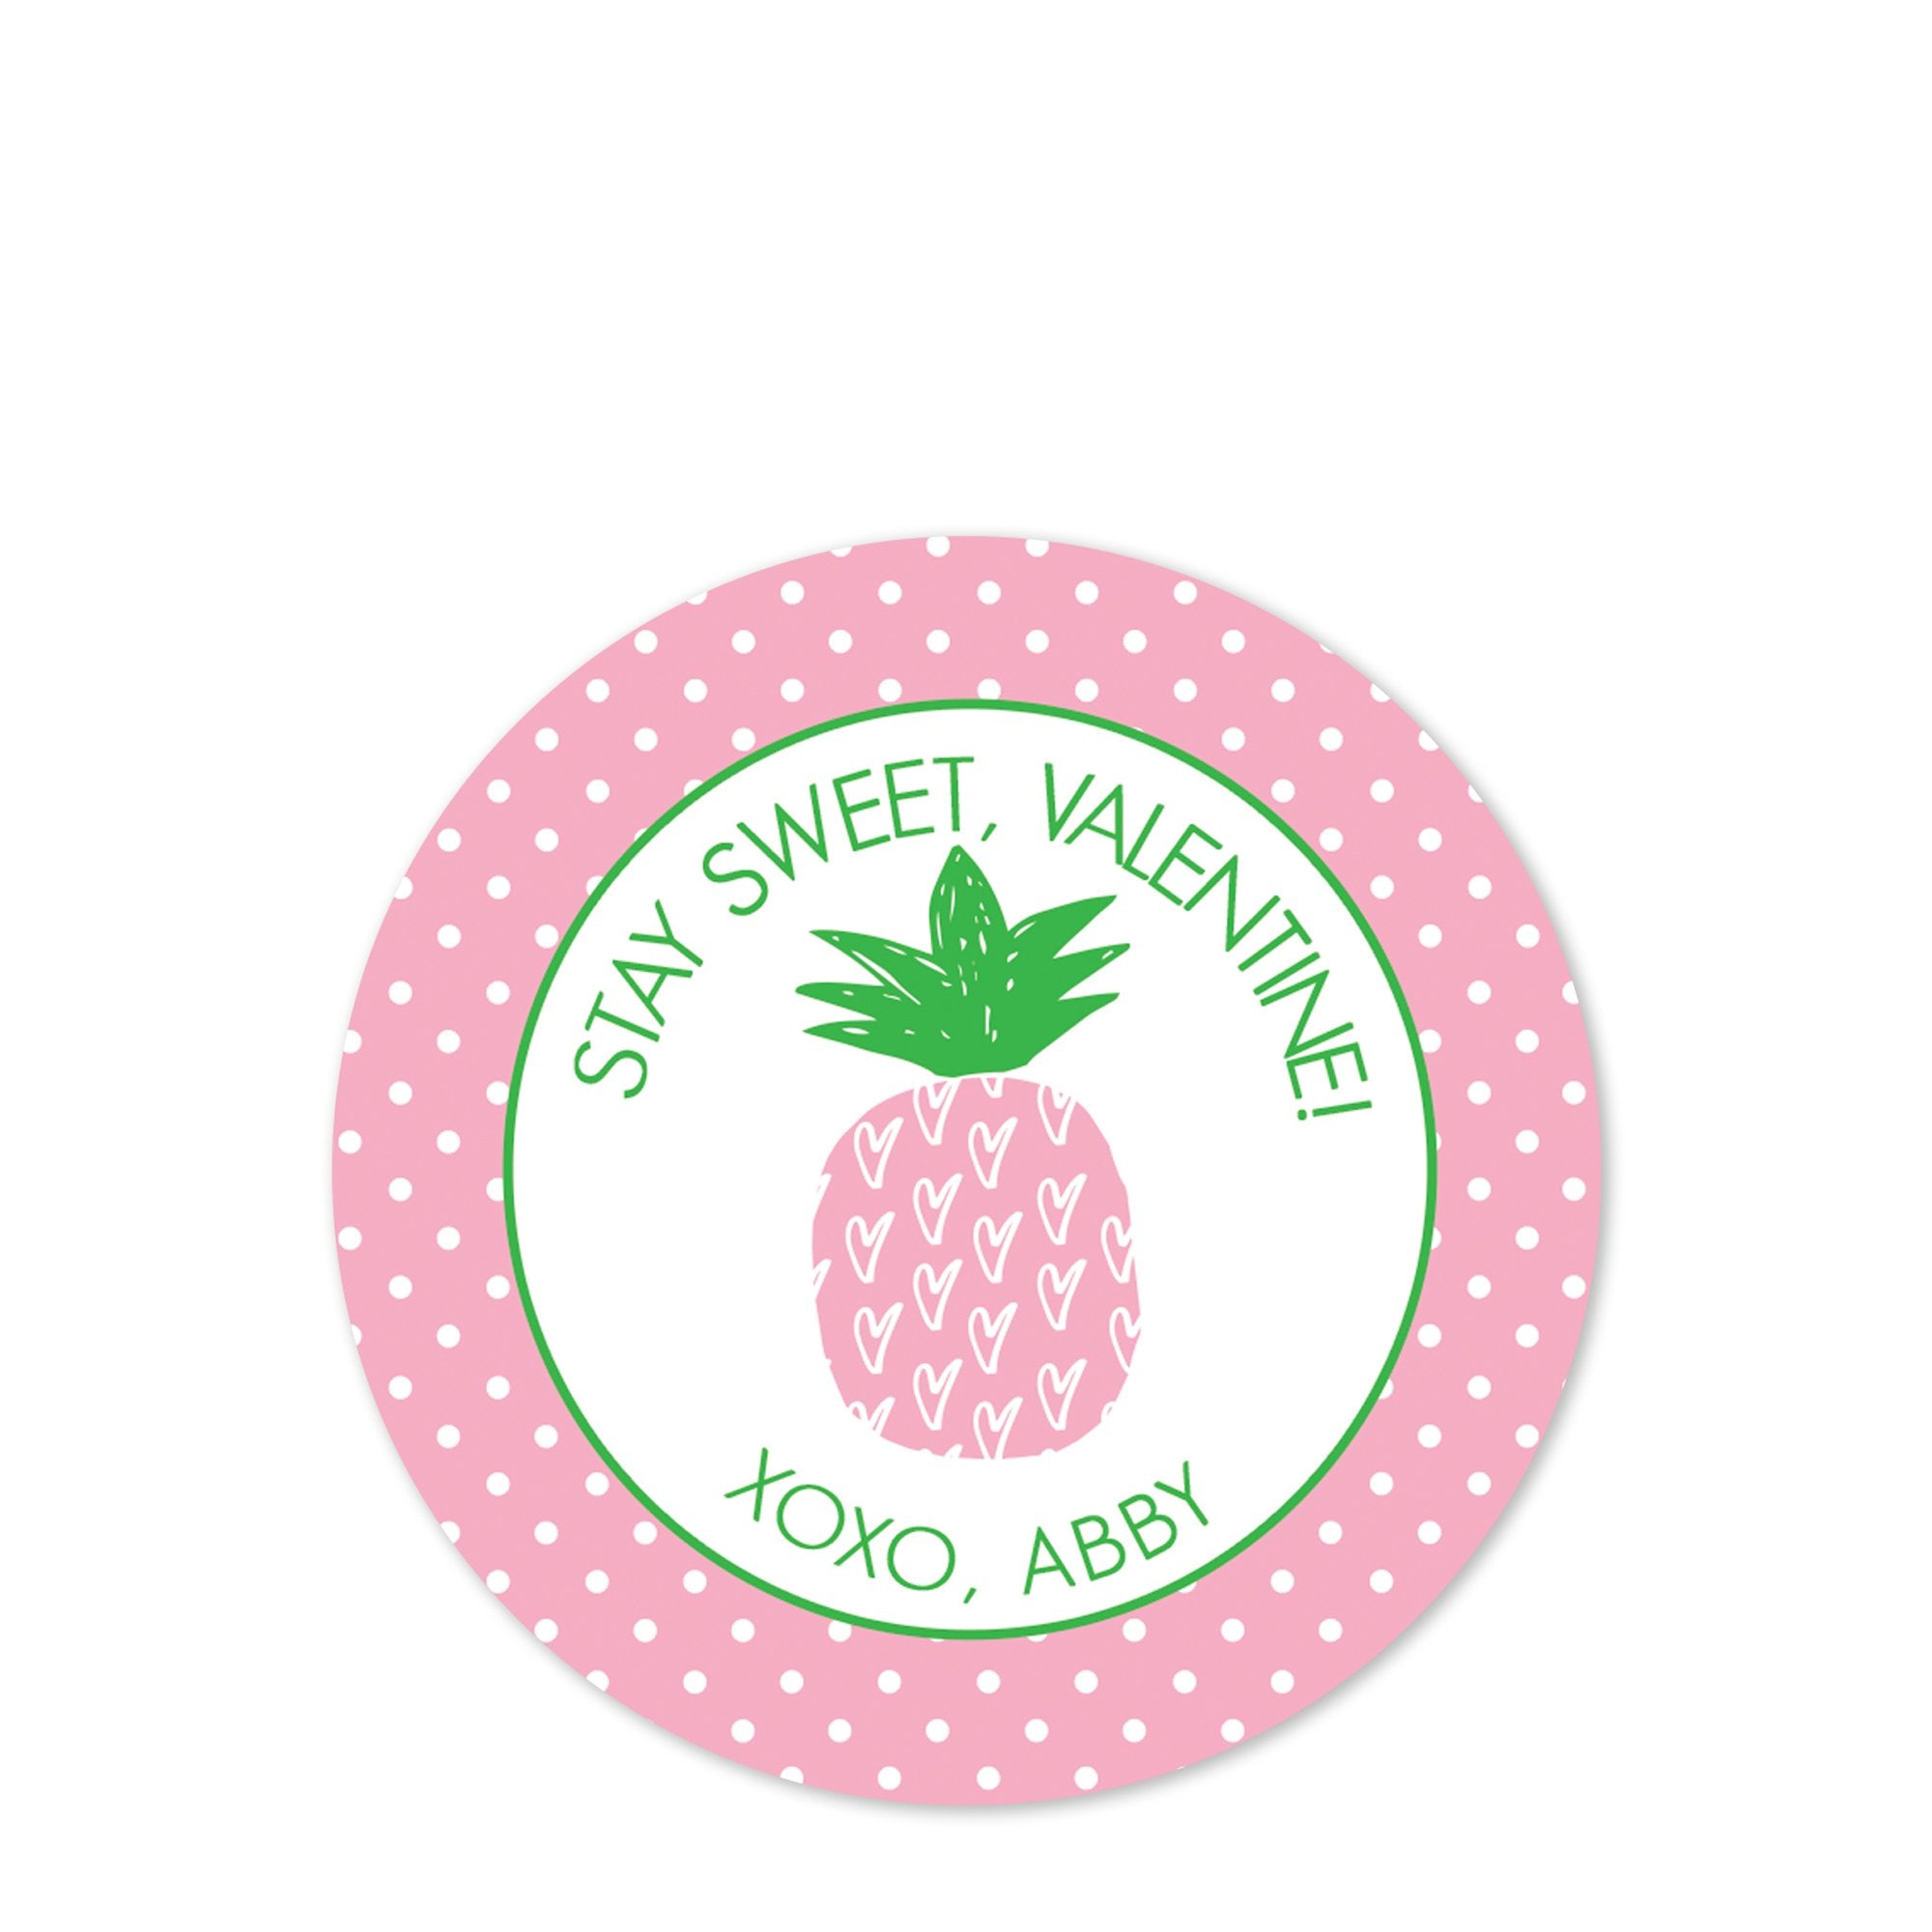 Stay sweet Valentine | Polka dots | Pineapple 